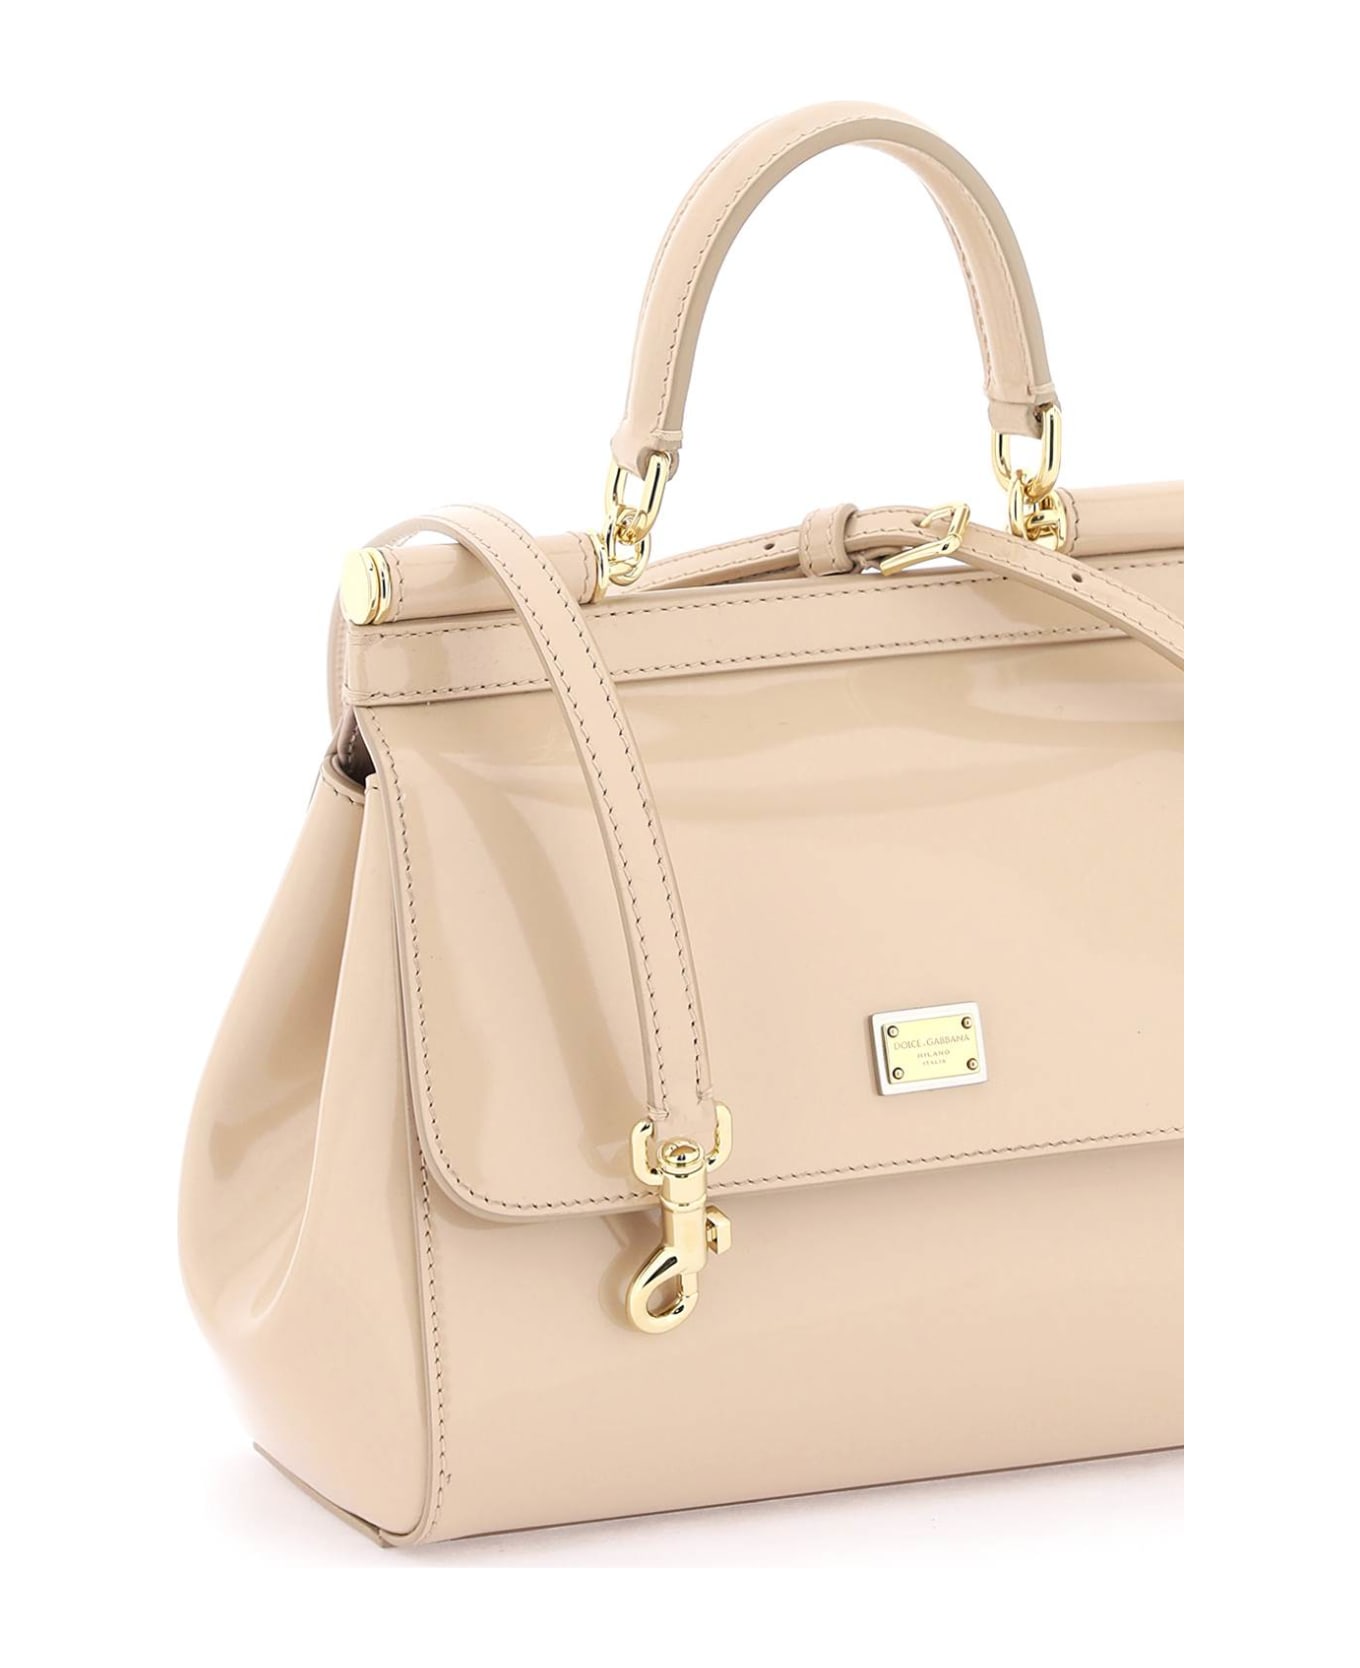 Dolce & Gabbana Bag "sicily" - POWDER トートバッグ